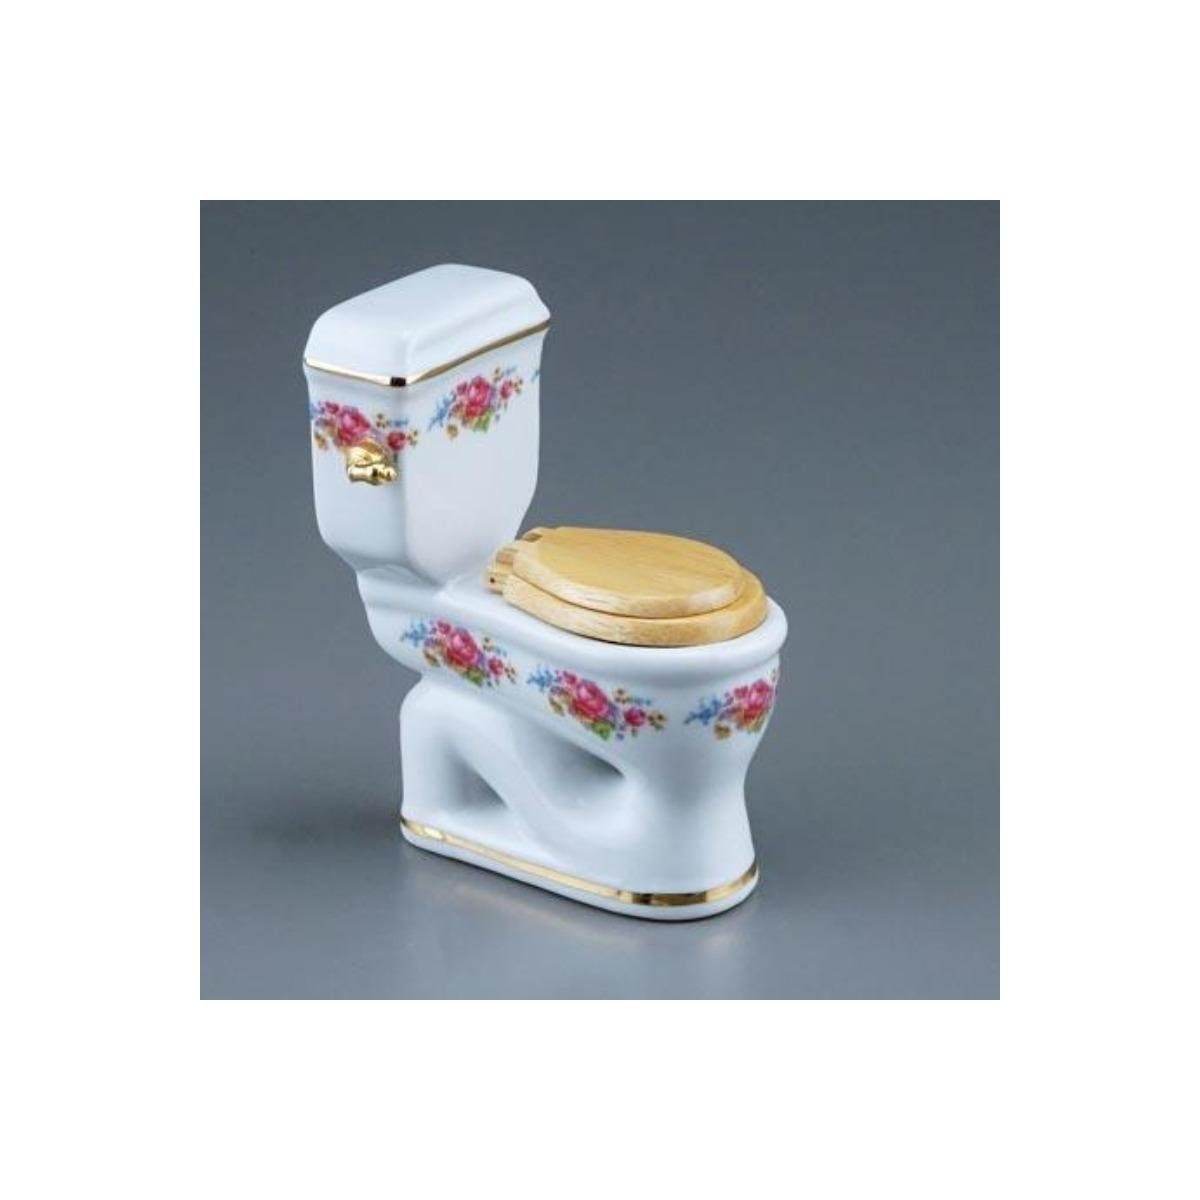 Reutter Porzellan "Dresdner - Miniatur Dekofigur Toilette Rose", 001.770/1